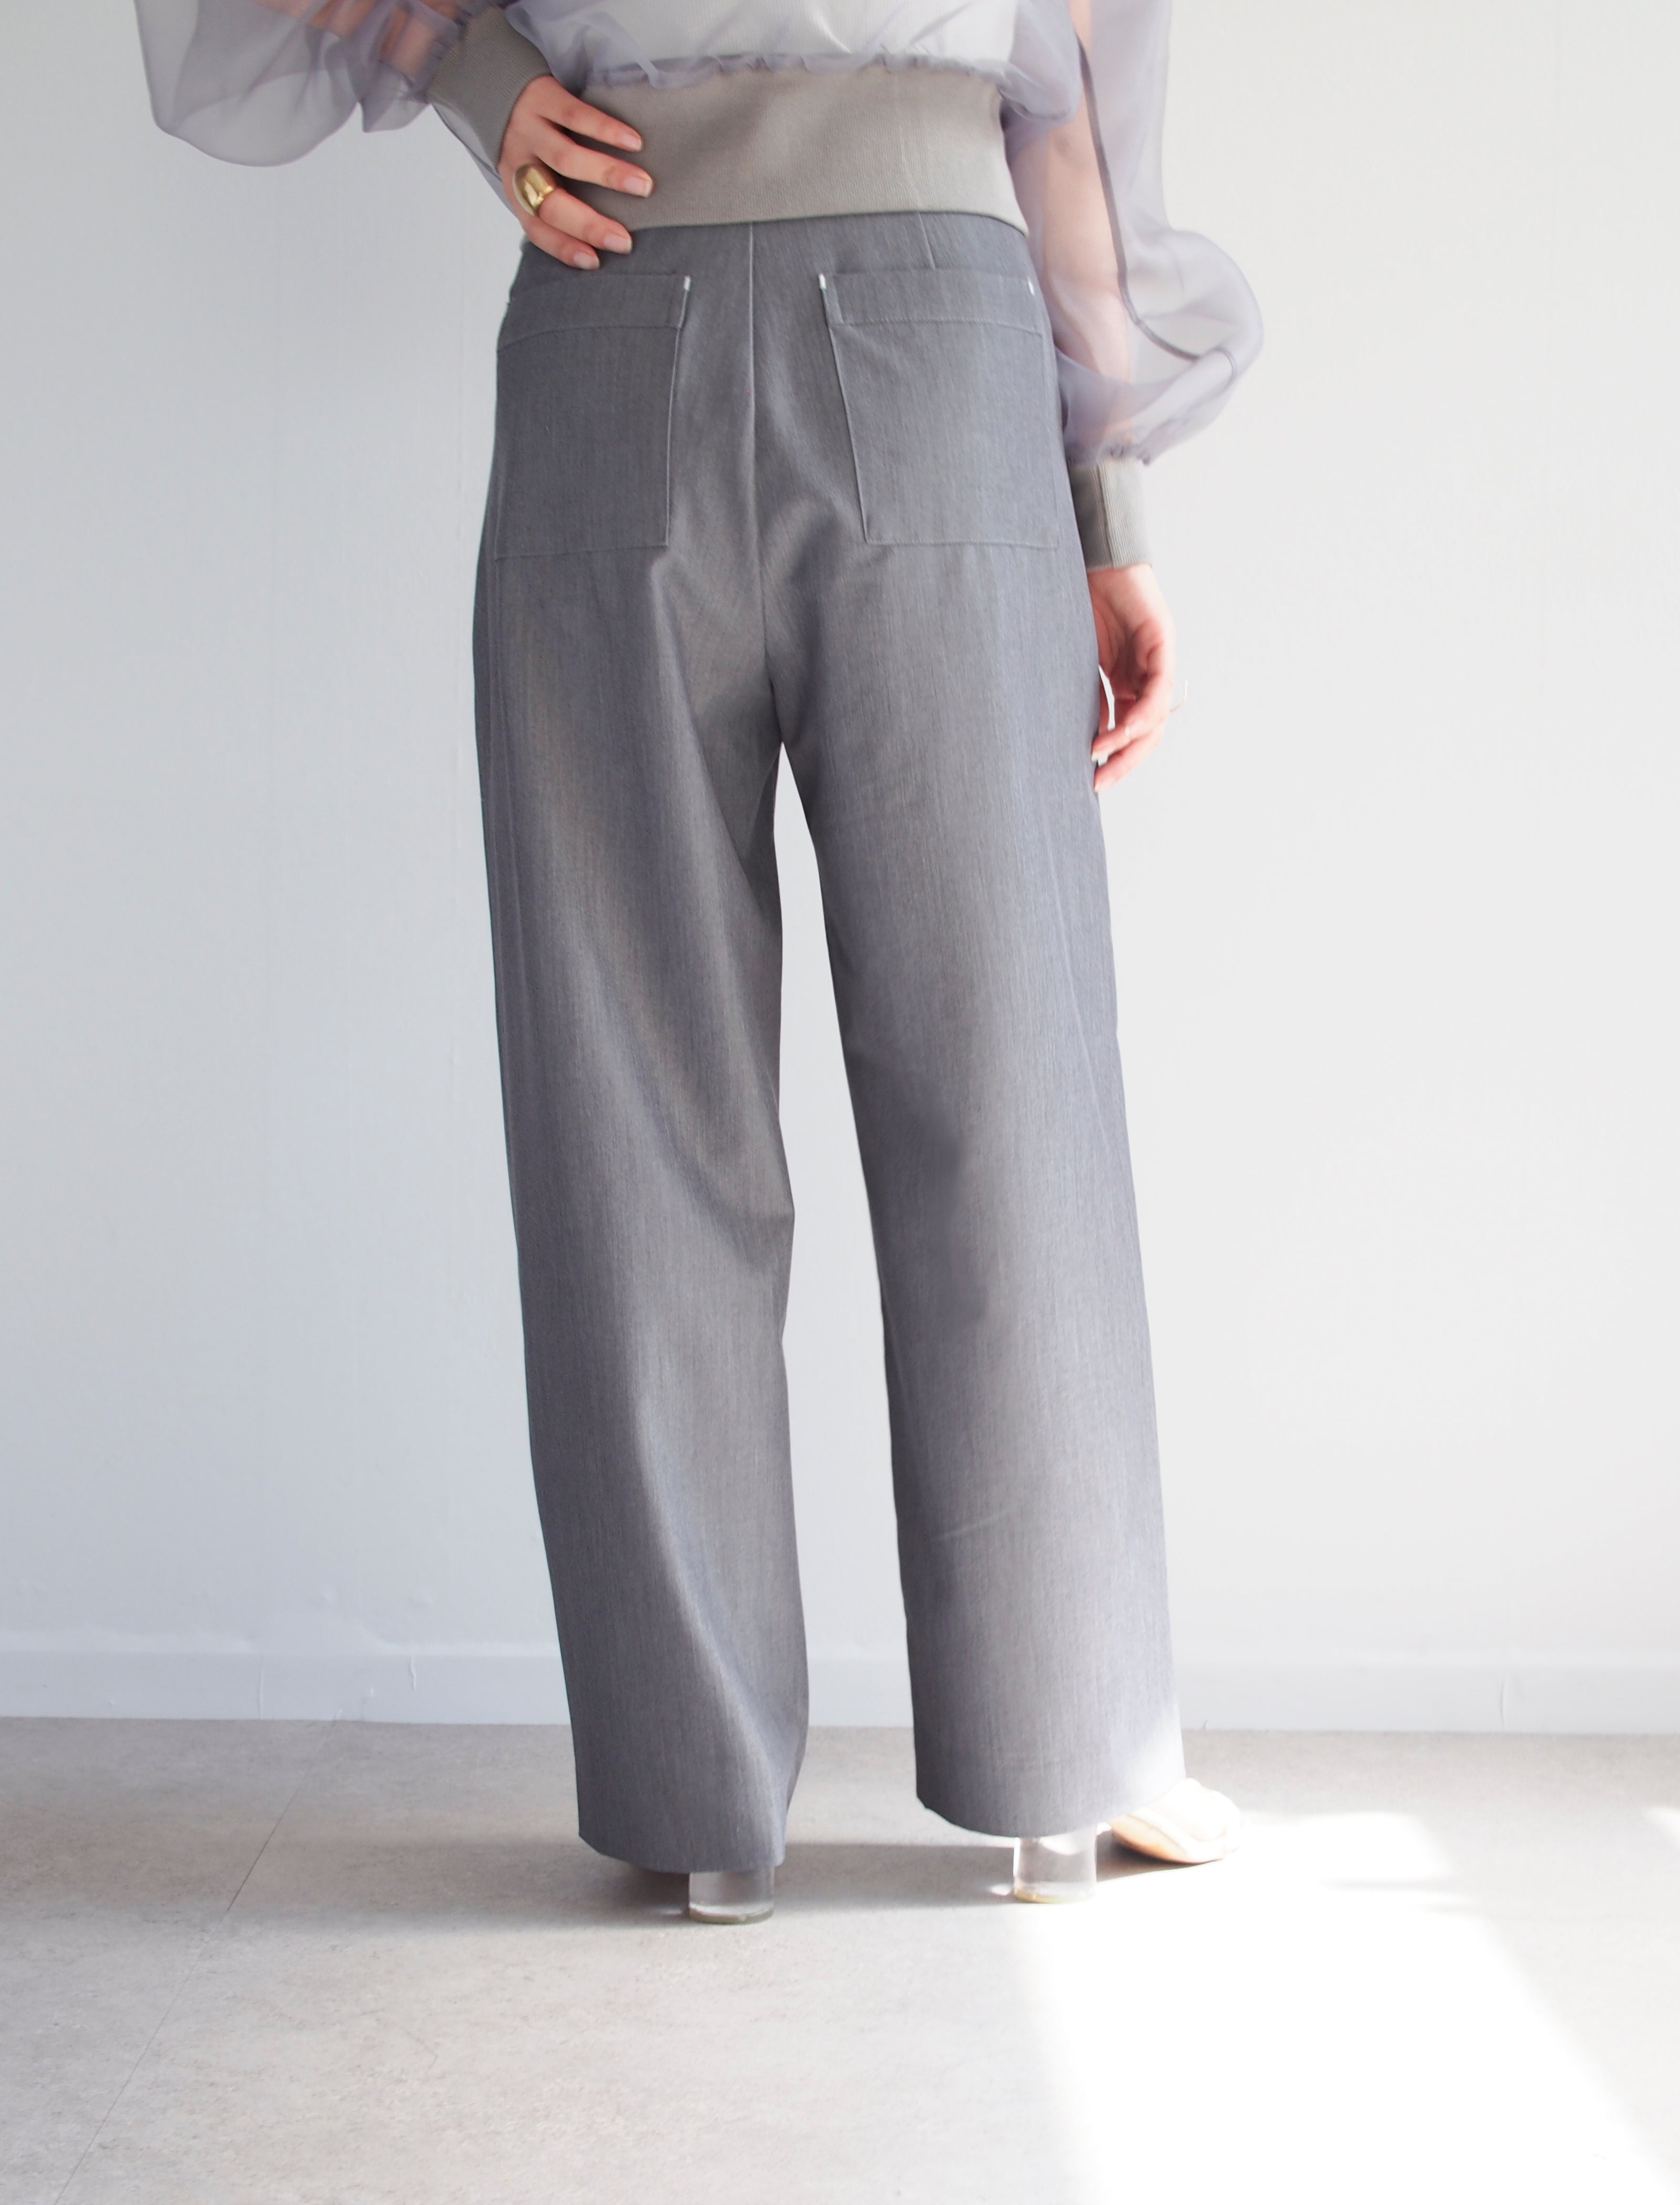 Stitch Tuck Pants / GRAY / S / 158cm